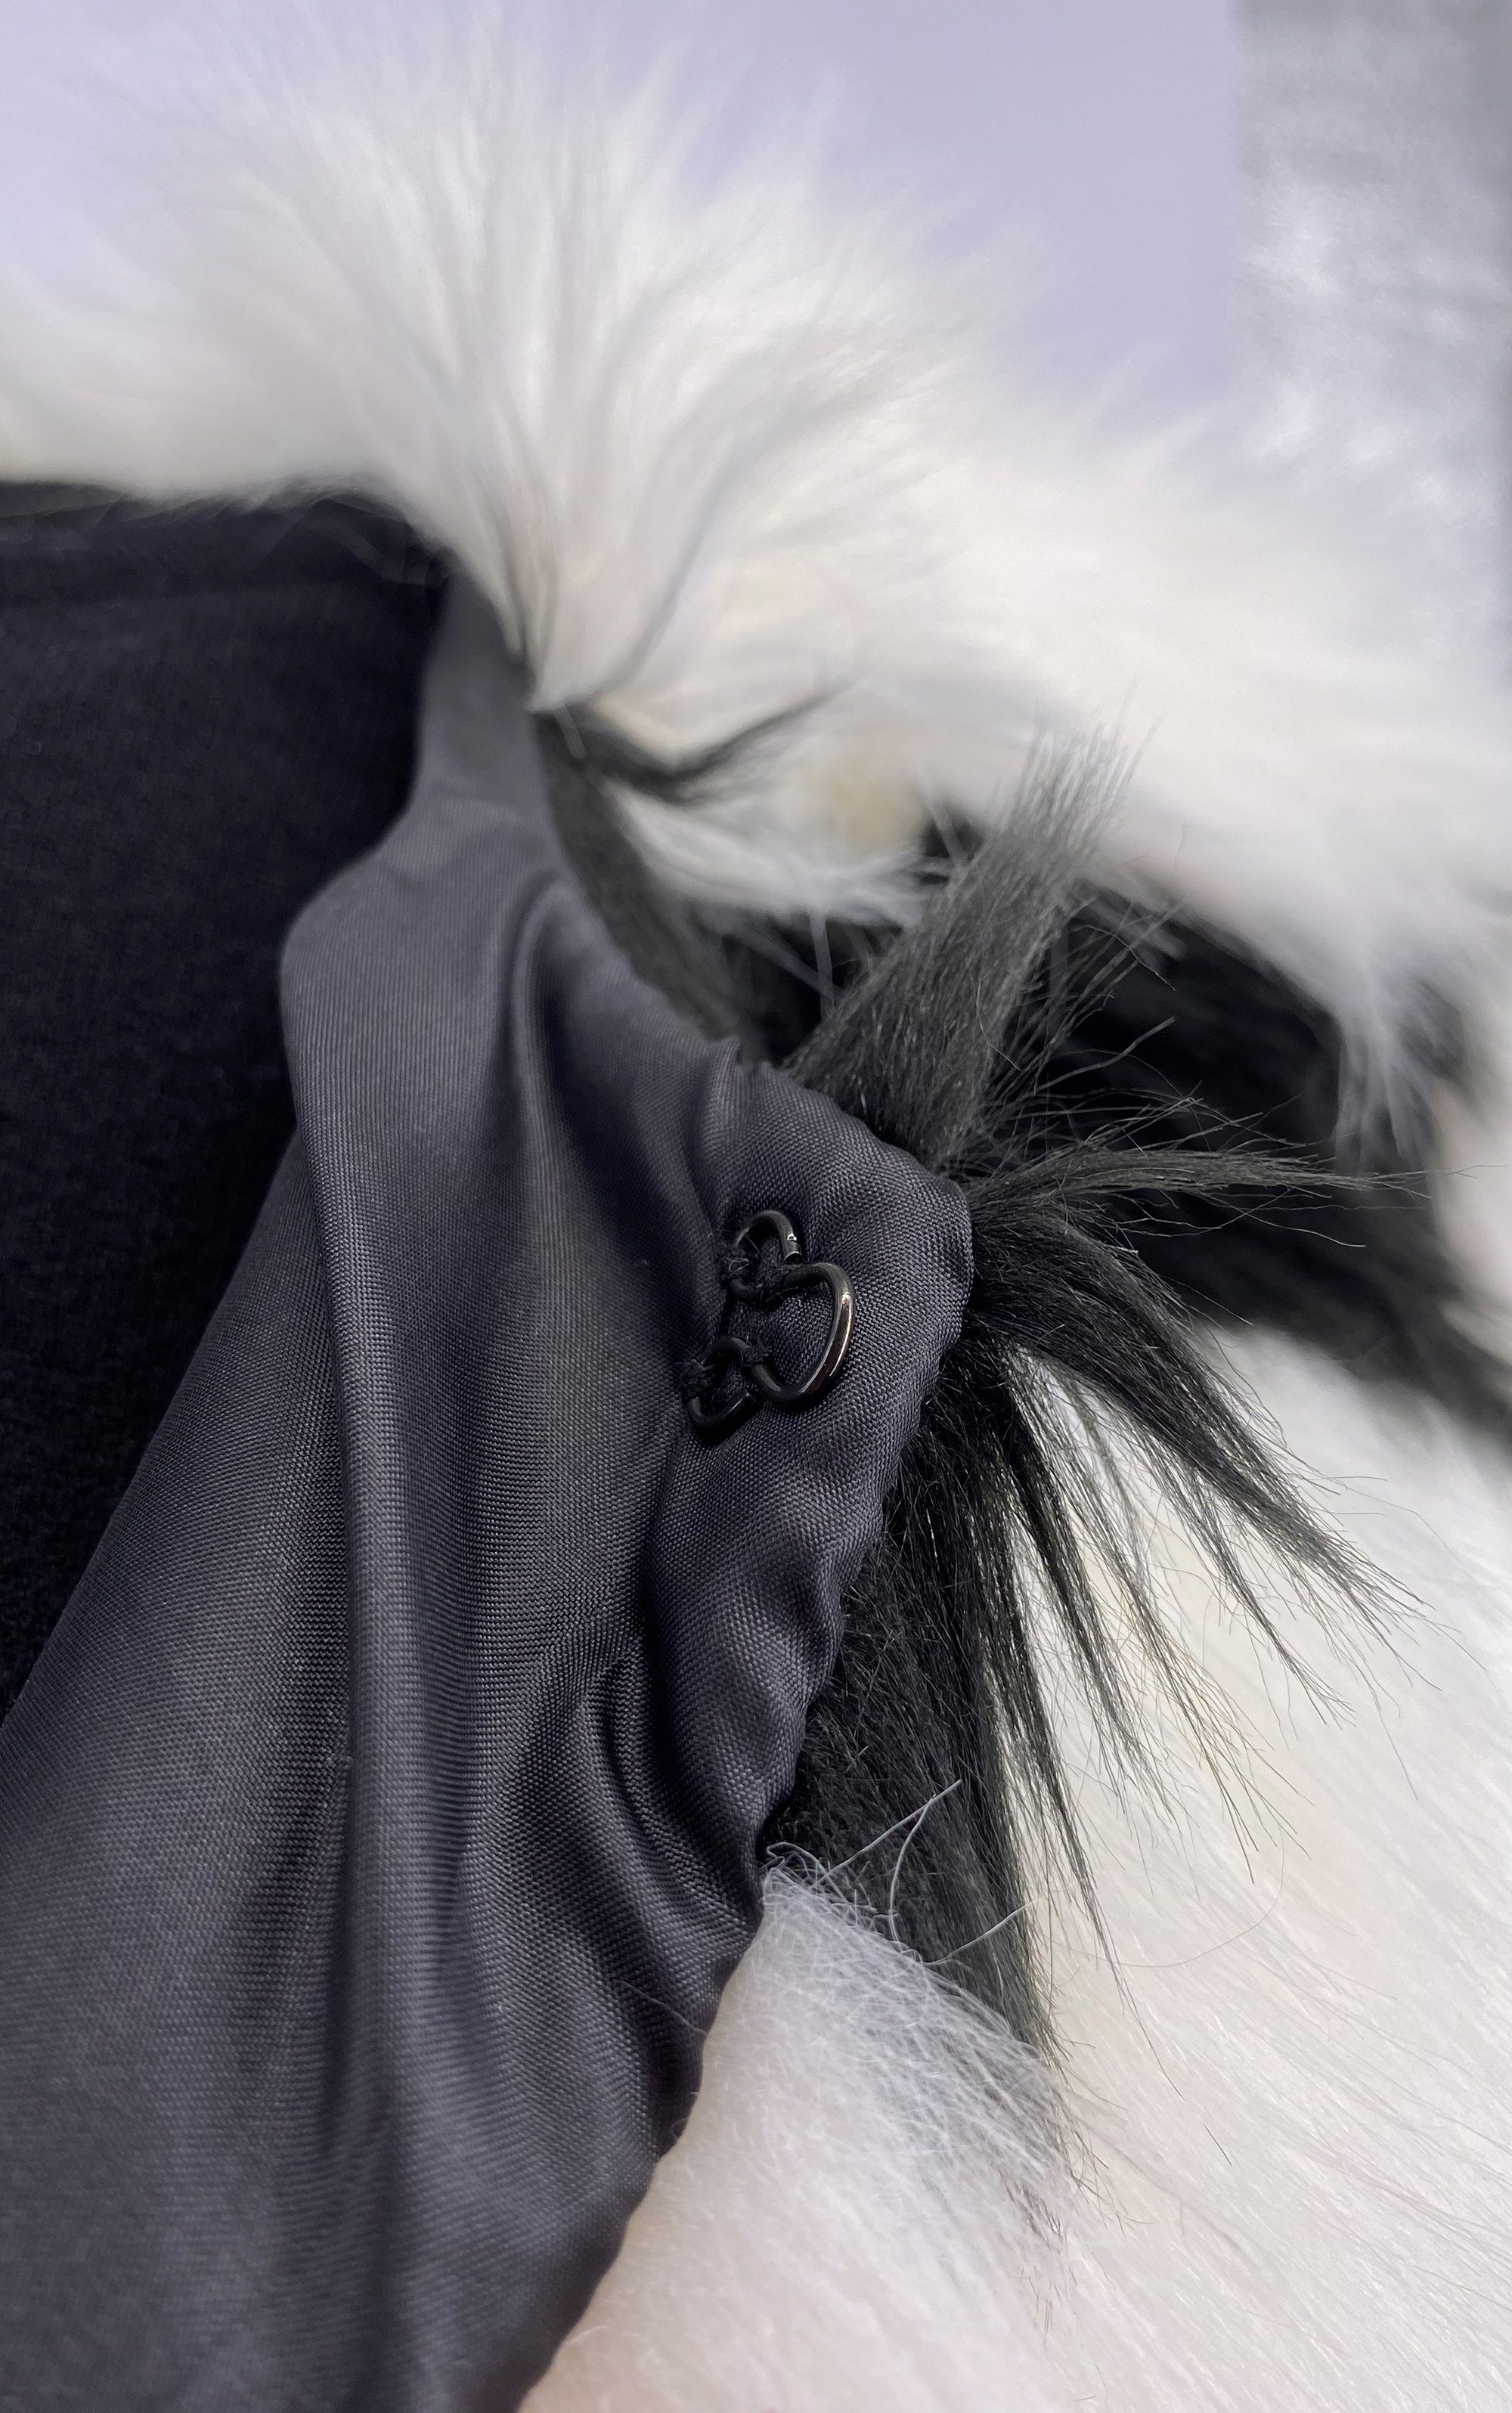 Antonio Cavosi Fellimitatjacke Mehrfarbige Jacke mit Web-Pelz Reißverschluss weiß-schwarz kuschelige